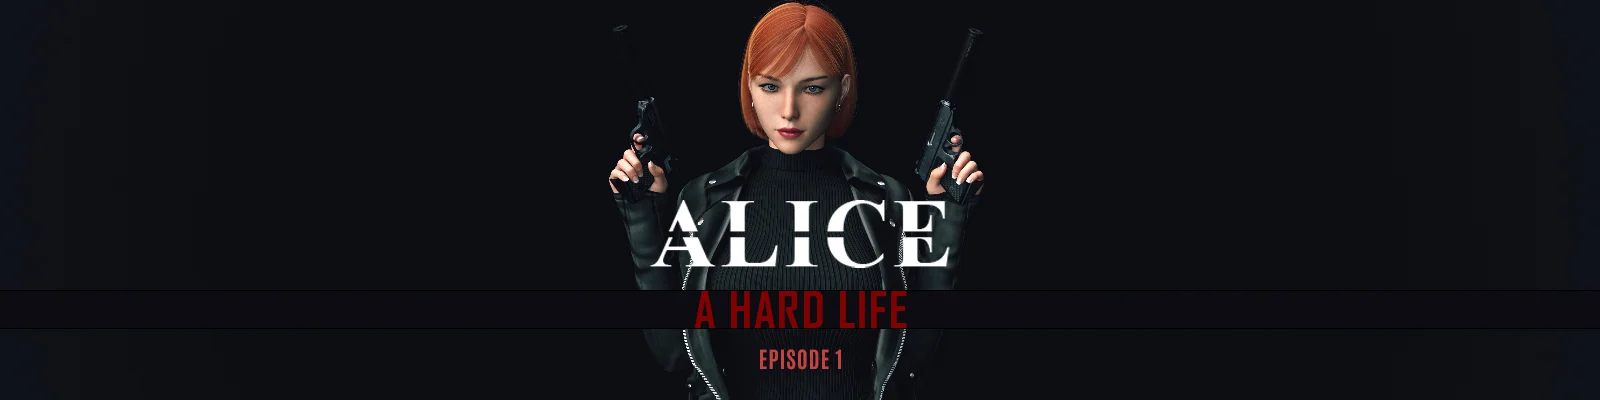 Alice: A Hard Life Ep.1 v.1.5